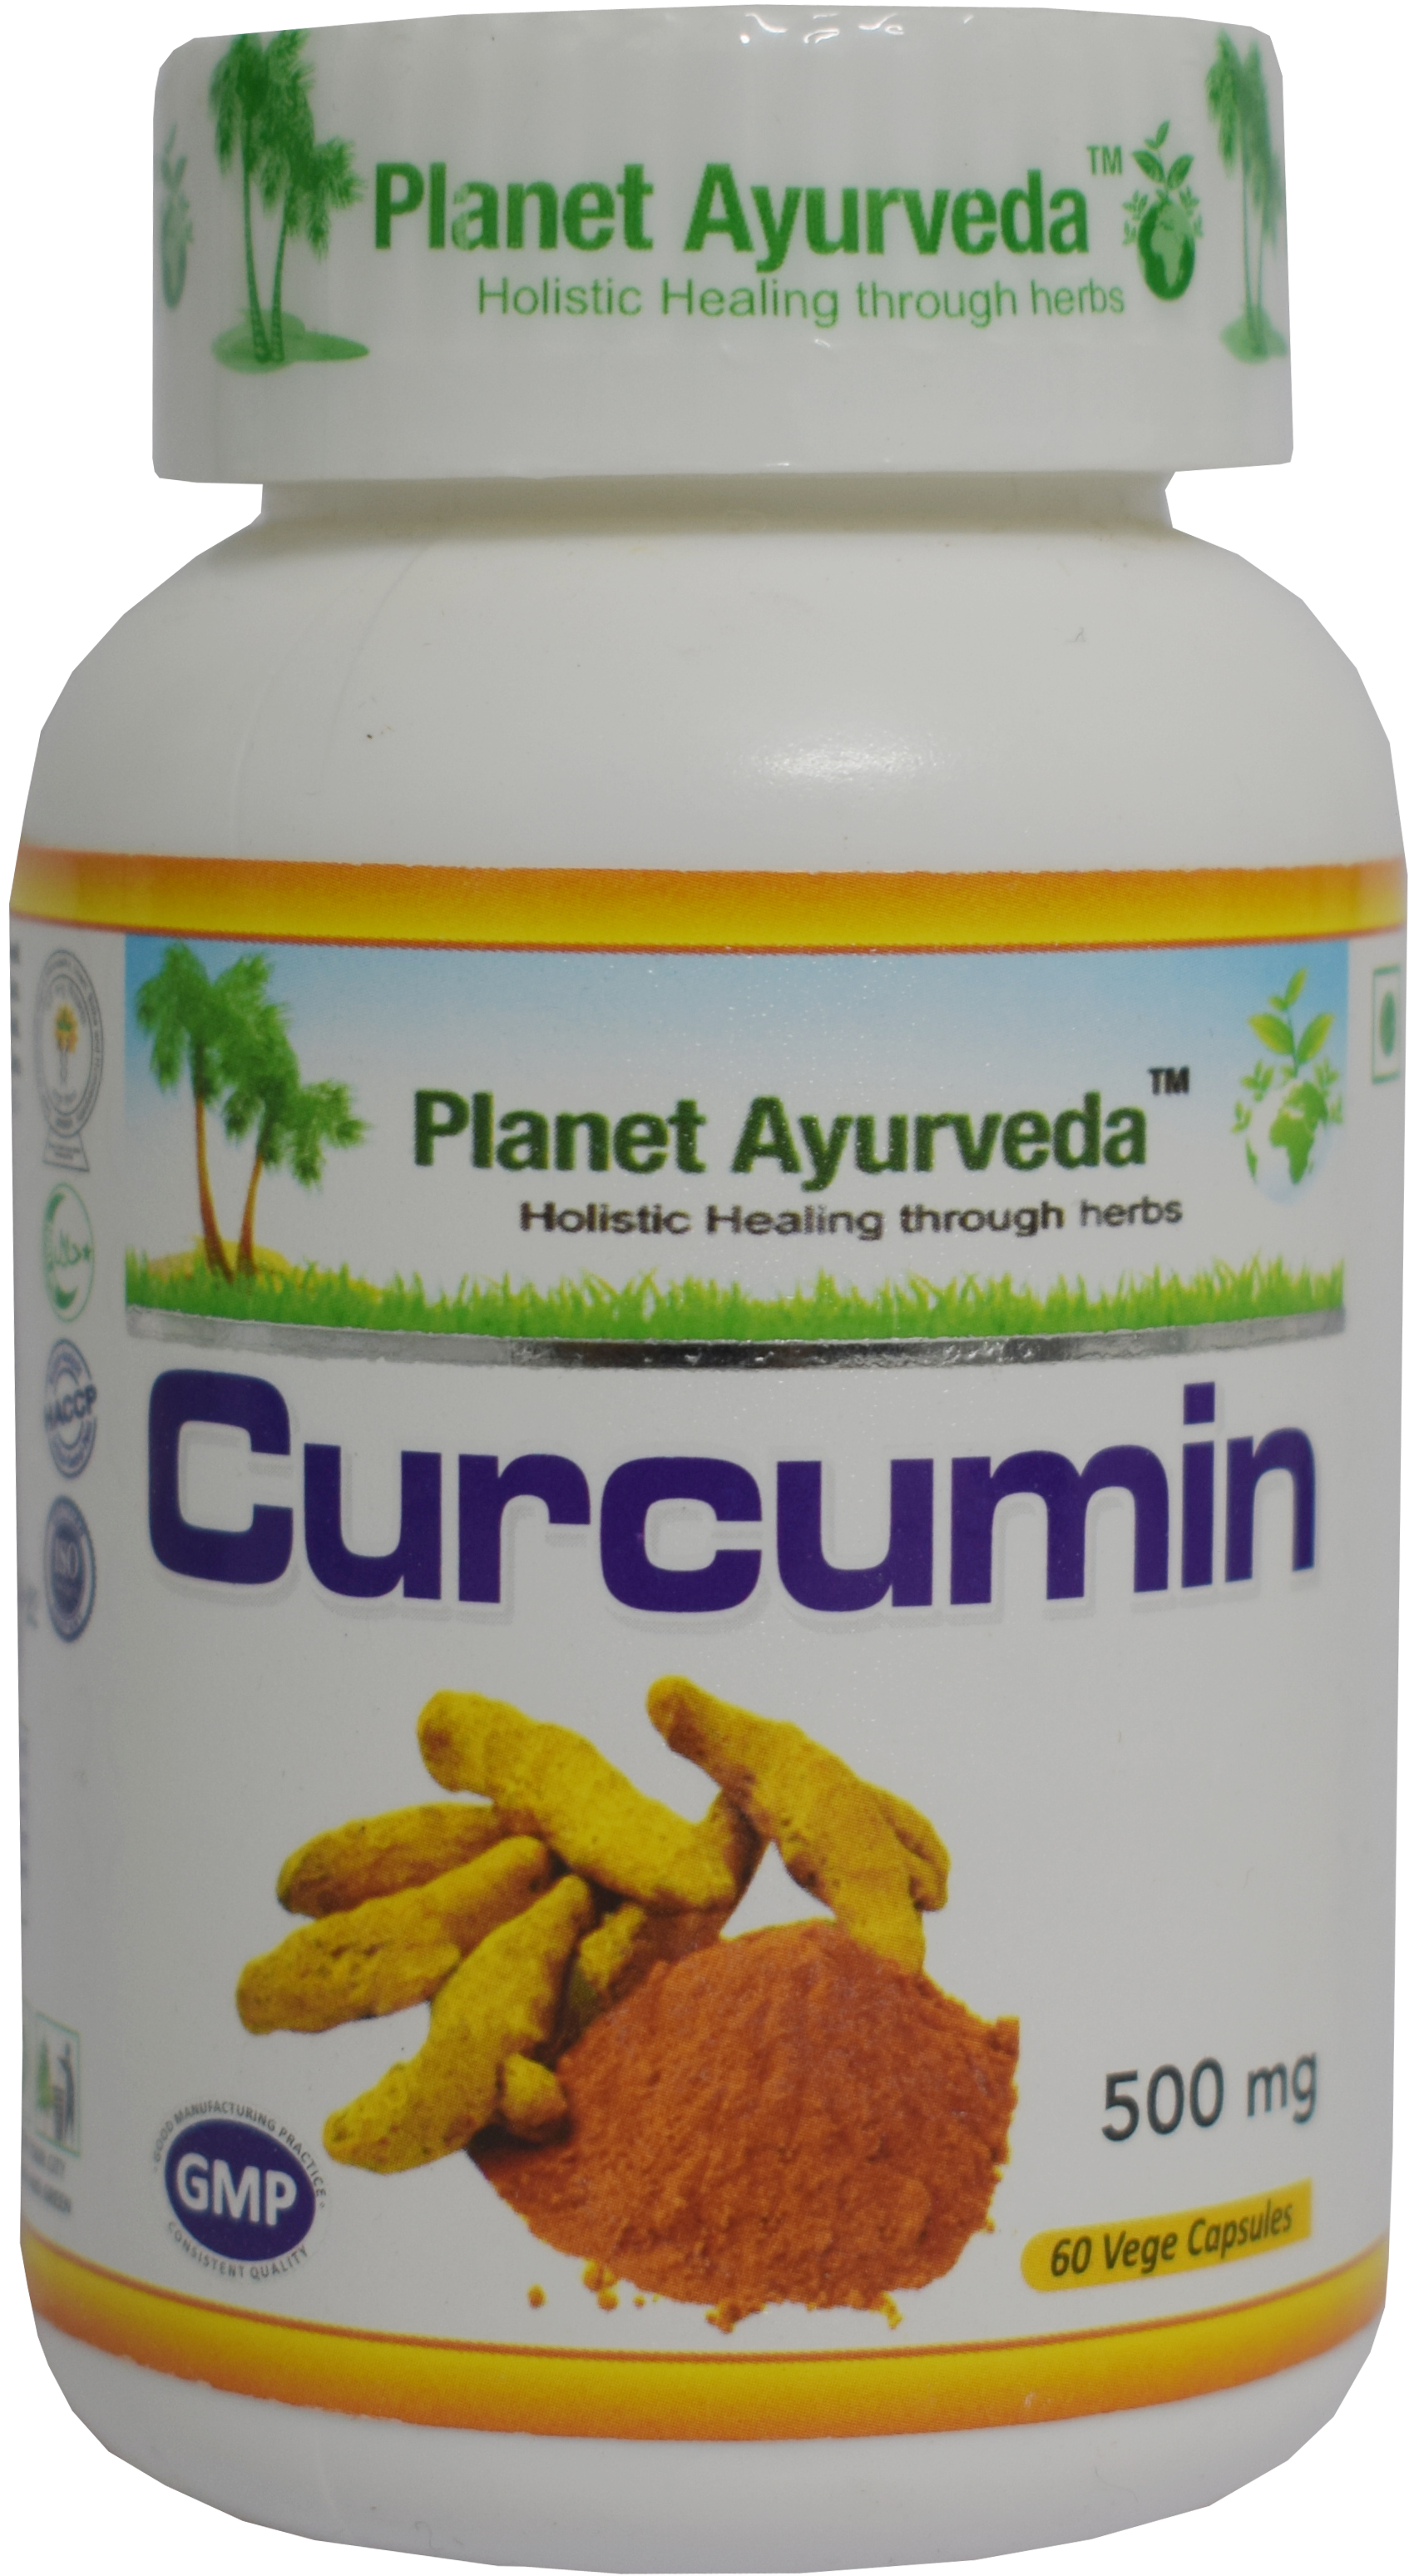 Buy Planet Ayurveda Curcumin Capsules at Best Price Online